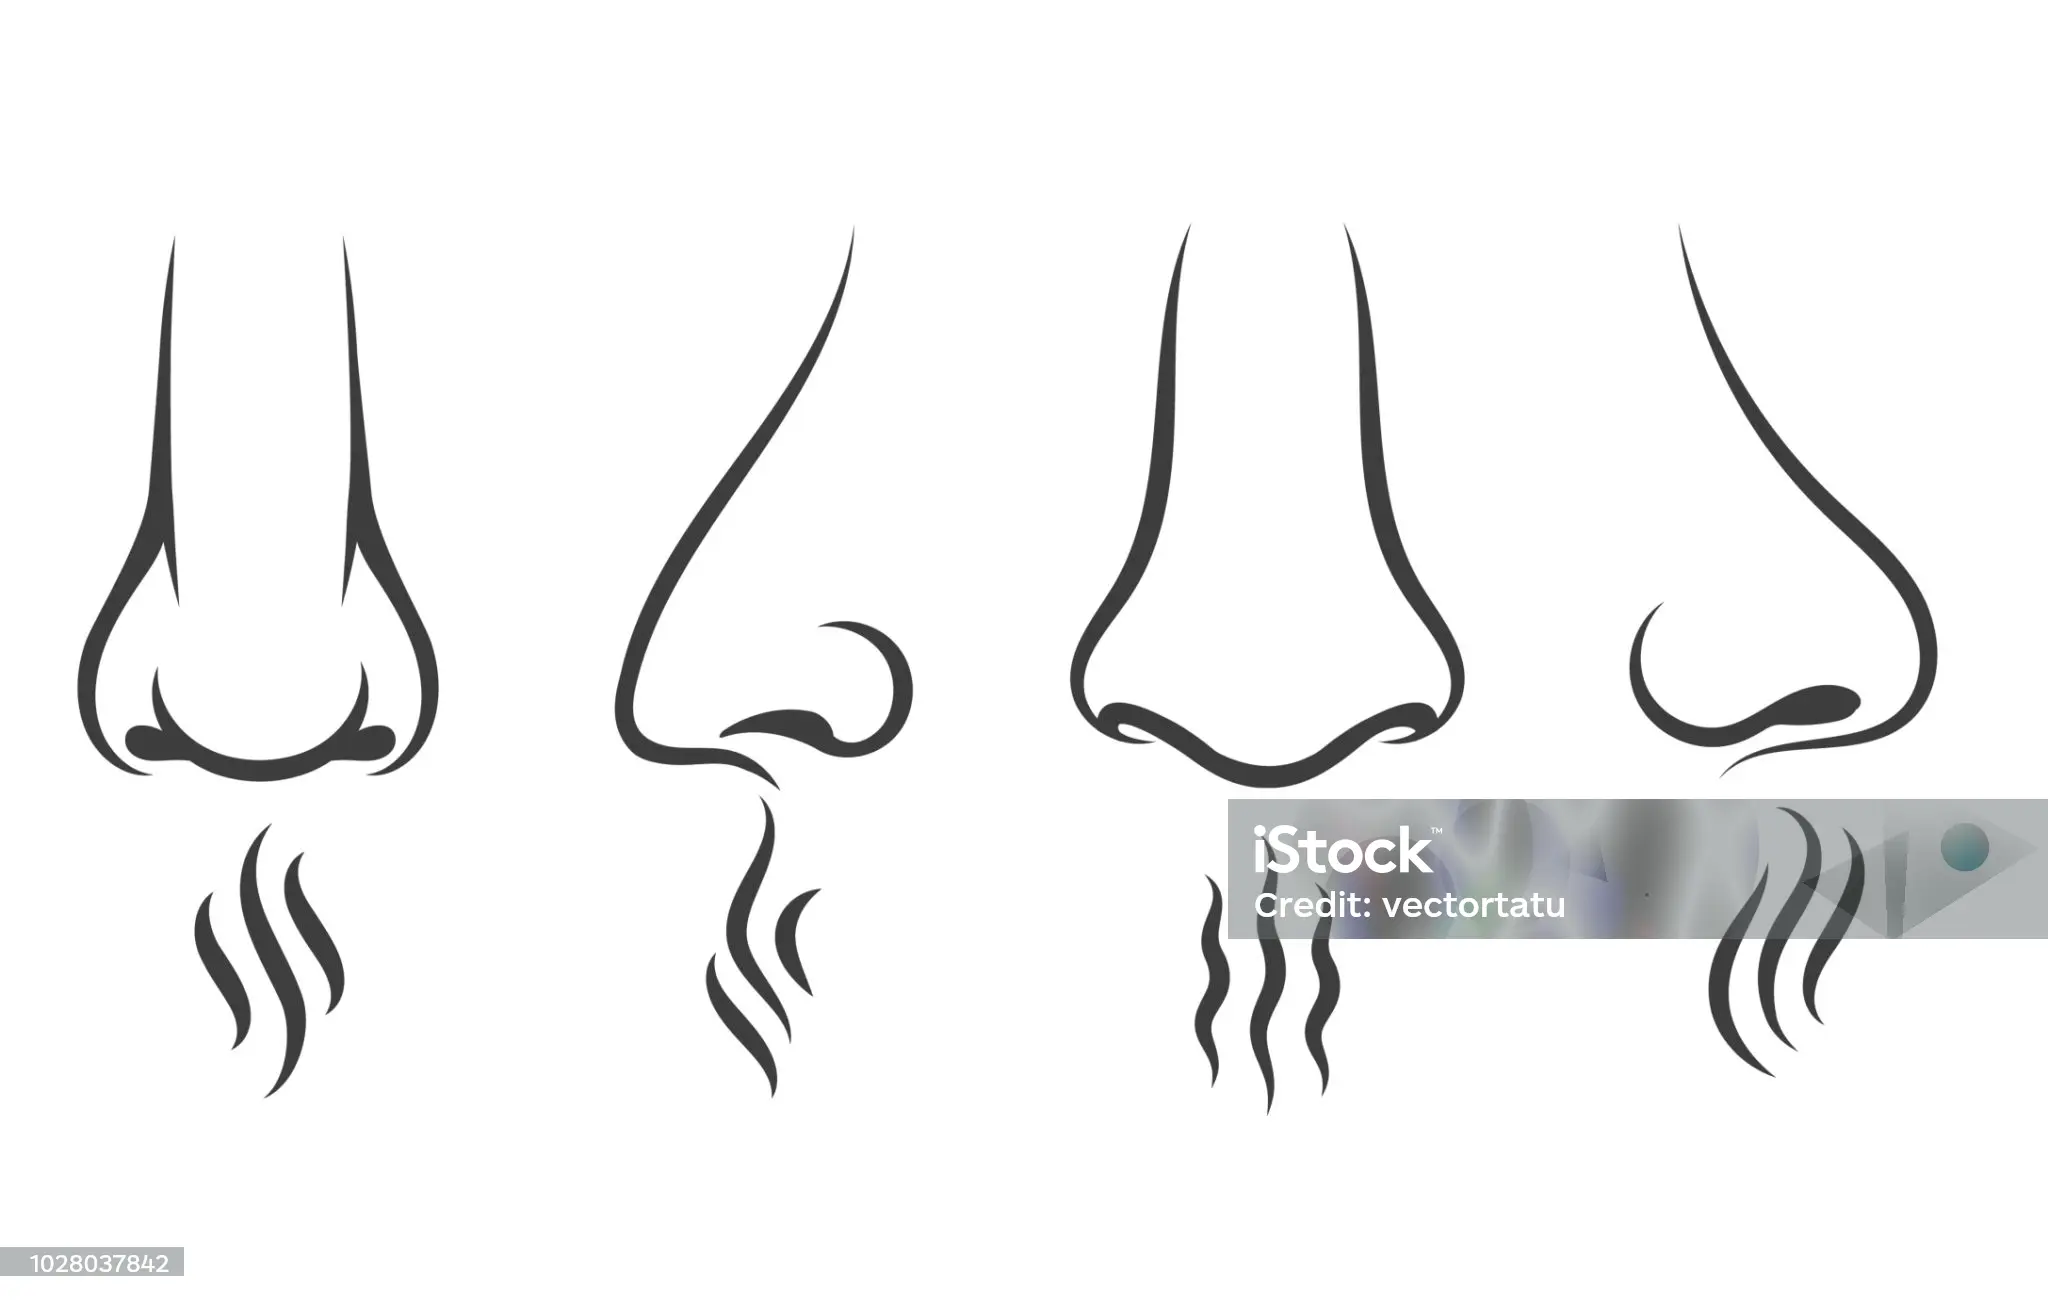 https://media.istockphoto.com/id/1028037842/vector/nose-smell-icons.webp?s=2048x2048&w=is&k=20&c=7MYsQg8LfLOifSfOmmQuLZ5DRMIiqMBC4BiwuJhnQBM=